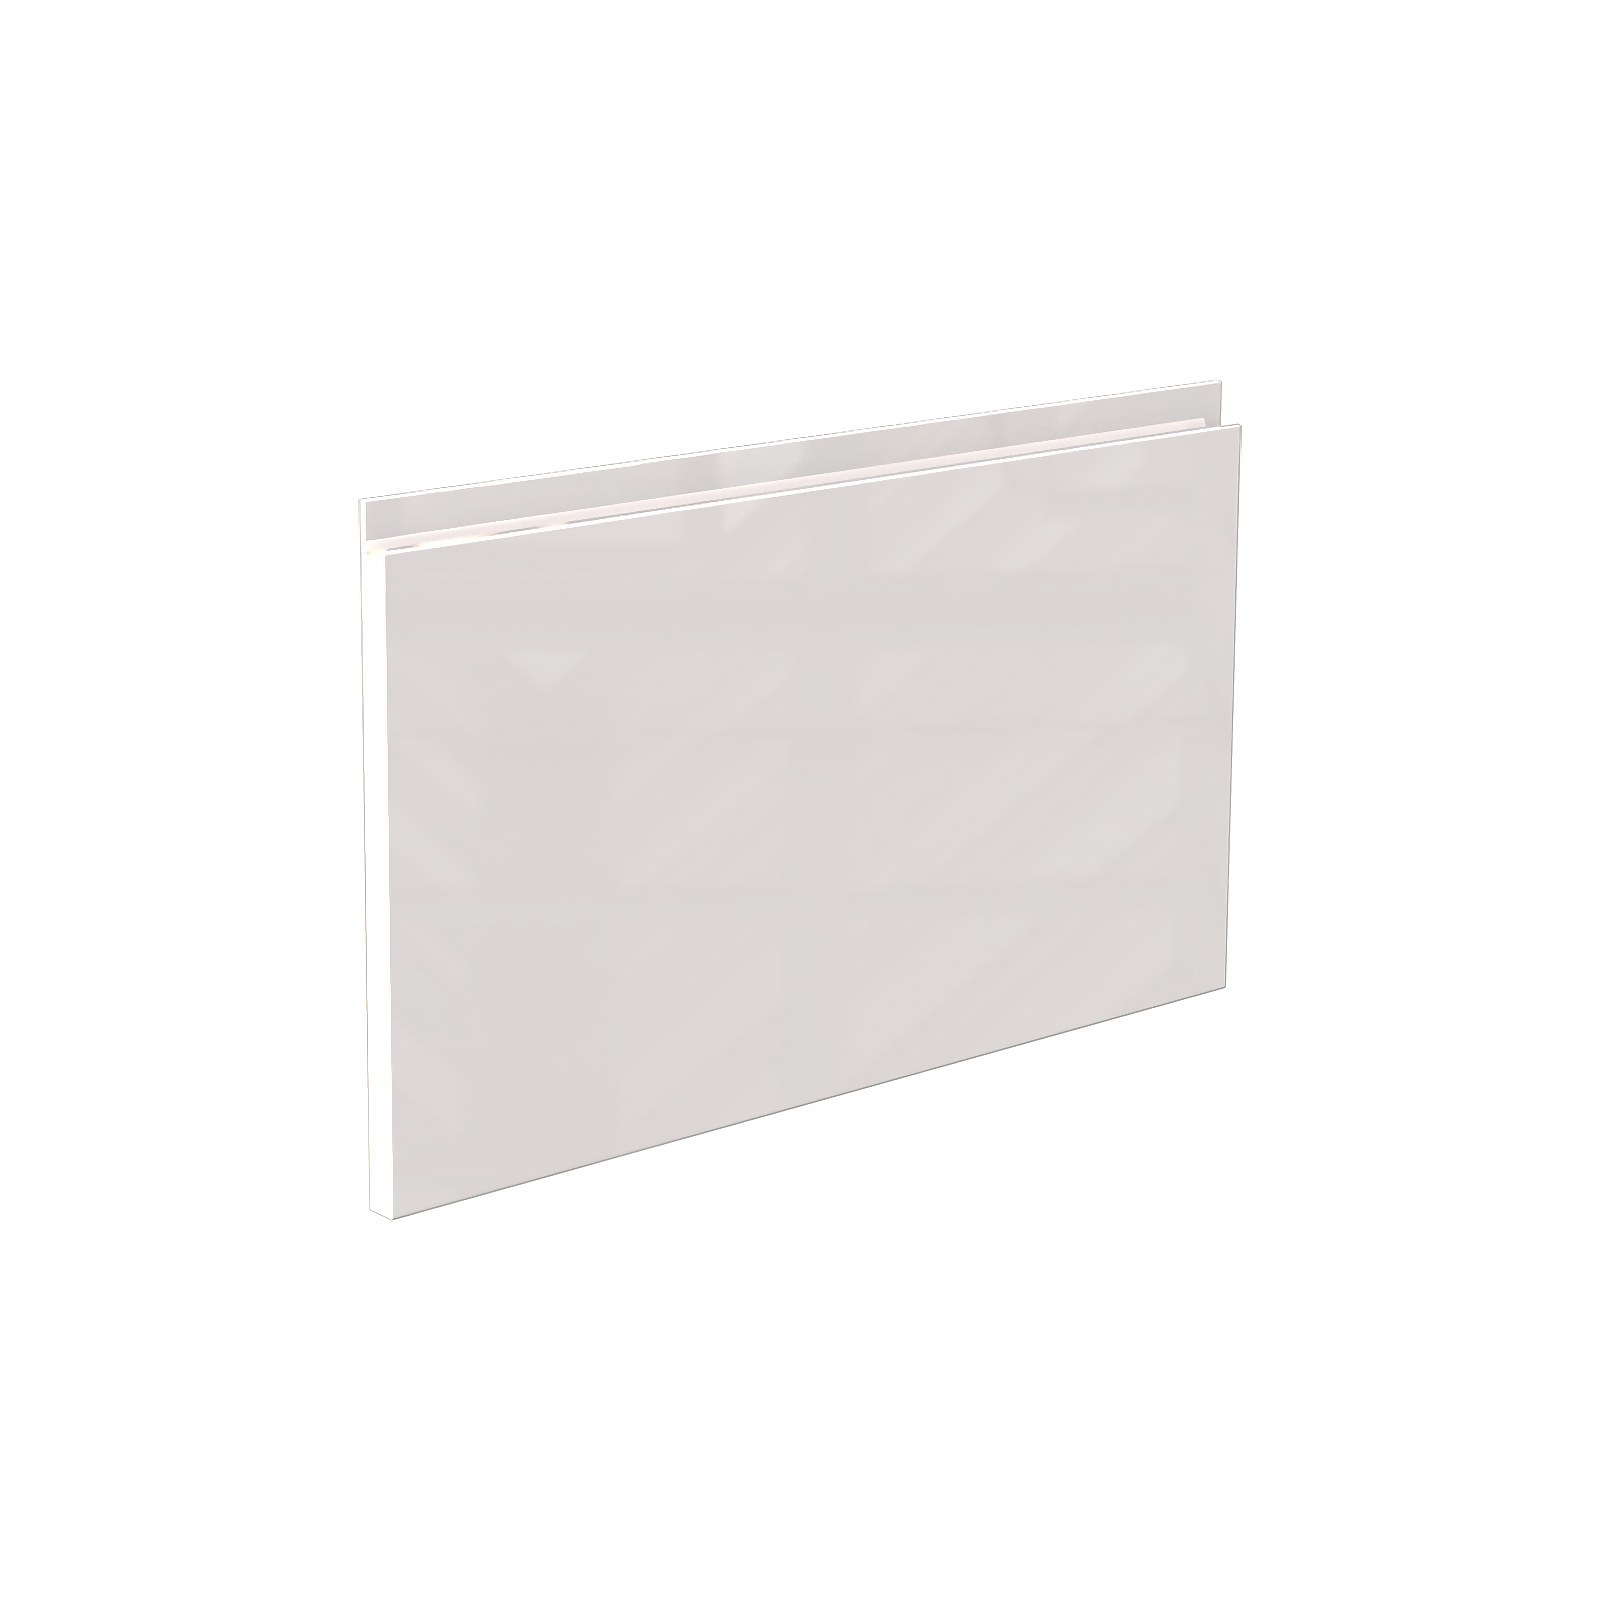 Handleless Kitchen Pan Drawer Front (W)597mm - Gloss White